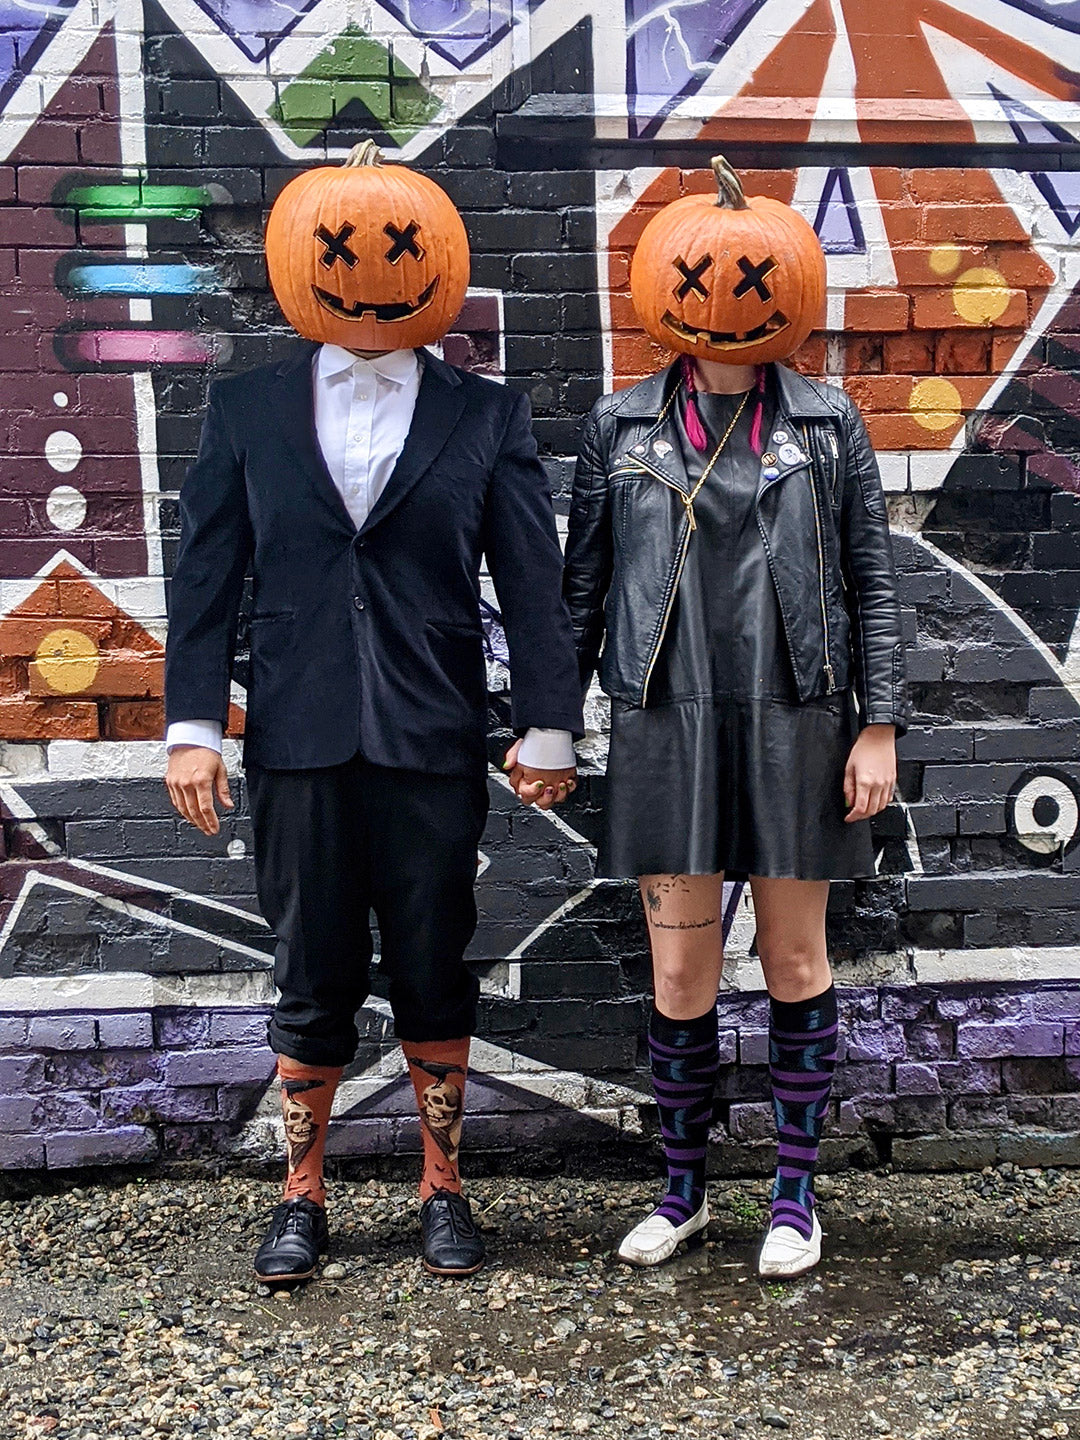 A couple with jack-o-lantern heads shows off Halloween fashions with fun Halloween socks 